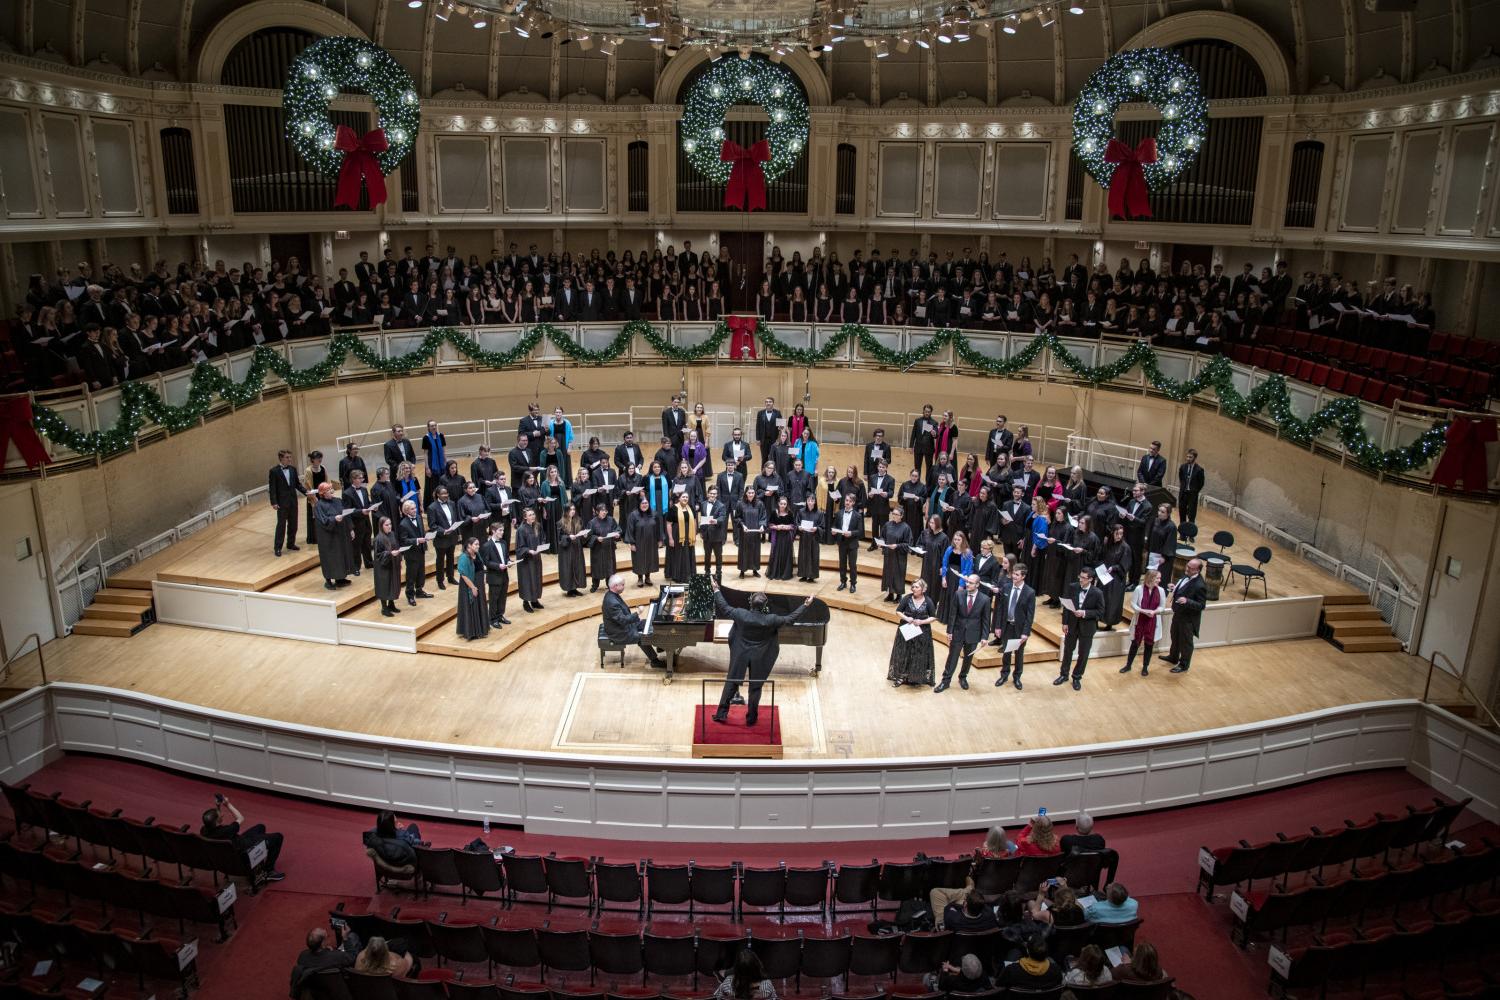 The <a href='http://news.denofthievesla.com'>bv伟德ios下载</a> Choir performs in the Chicago Symphony Hall.